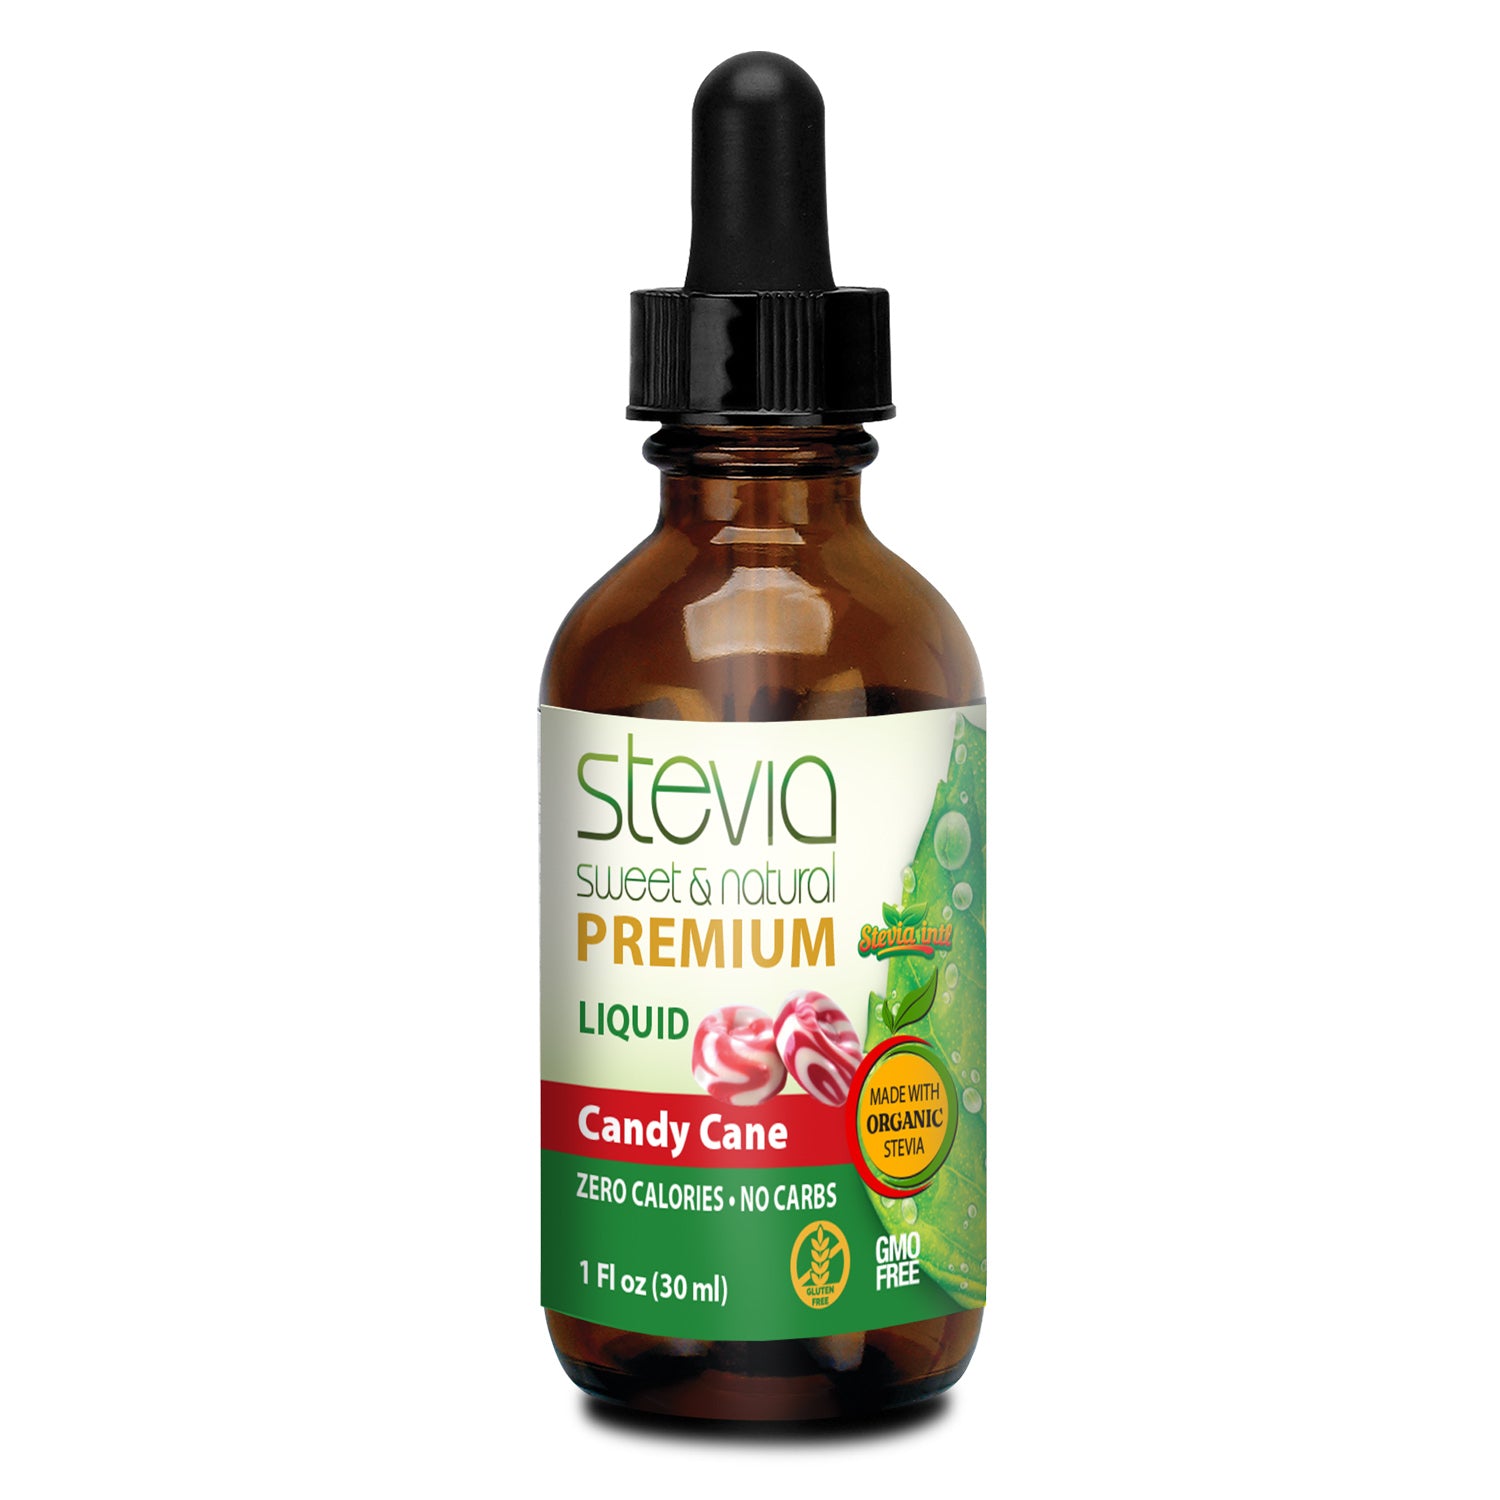 Candy Cane Stevia Liquid Drops - Zero Calories | Best All Natural Sugar Substitute